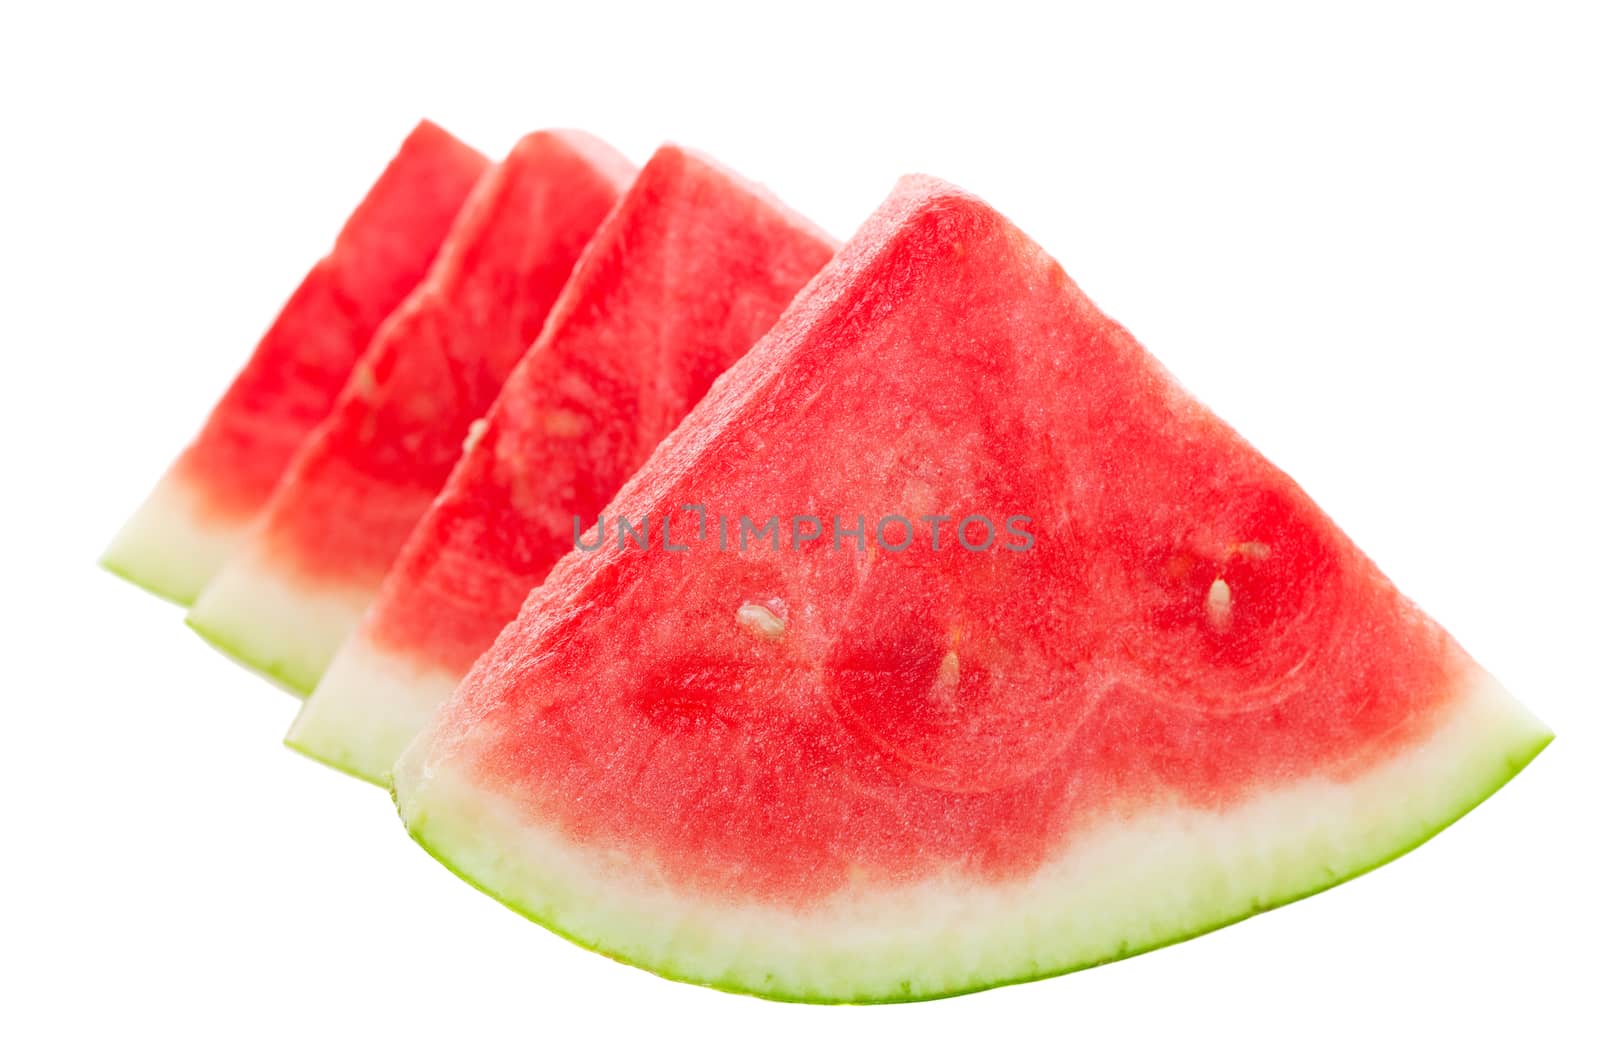 Watermelon Wedges by songbird839